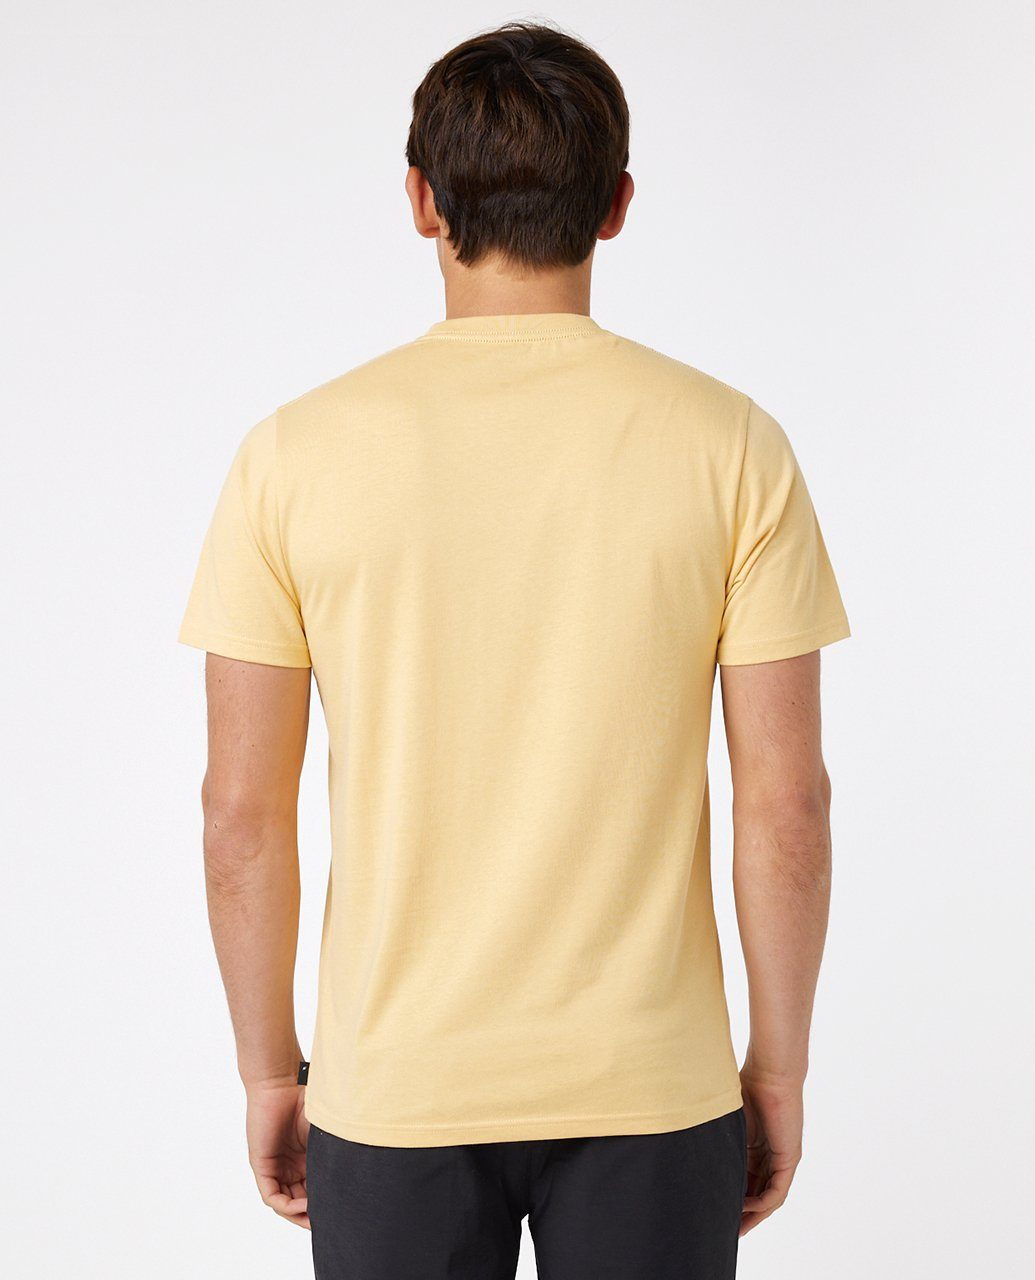 Print-Shirt T-Shirt Rip Curl Framed